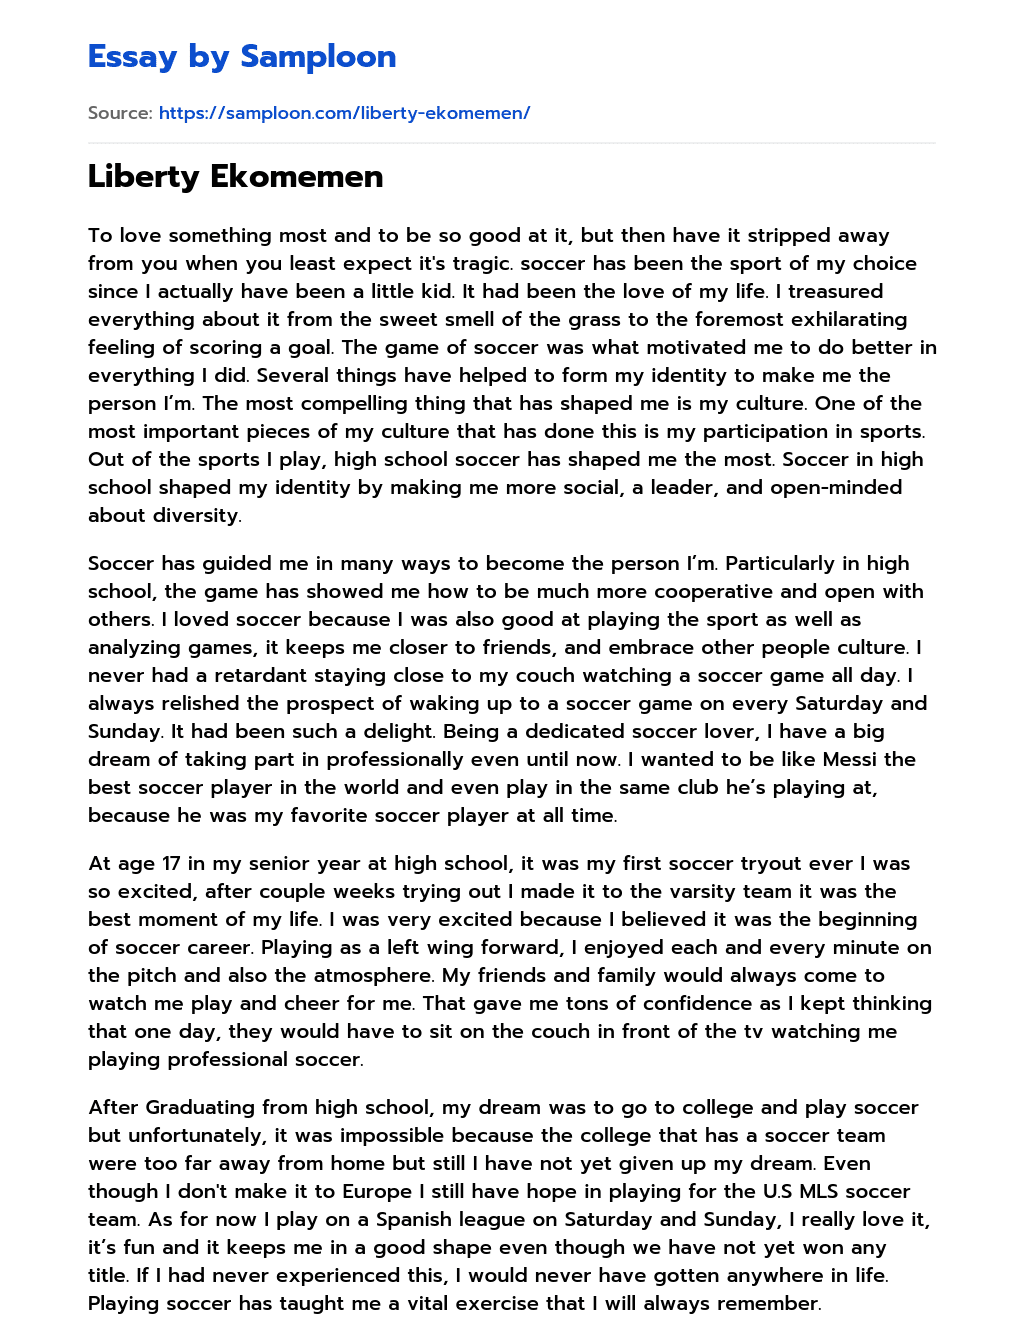 Liberty Ekomemen essay